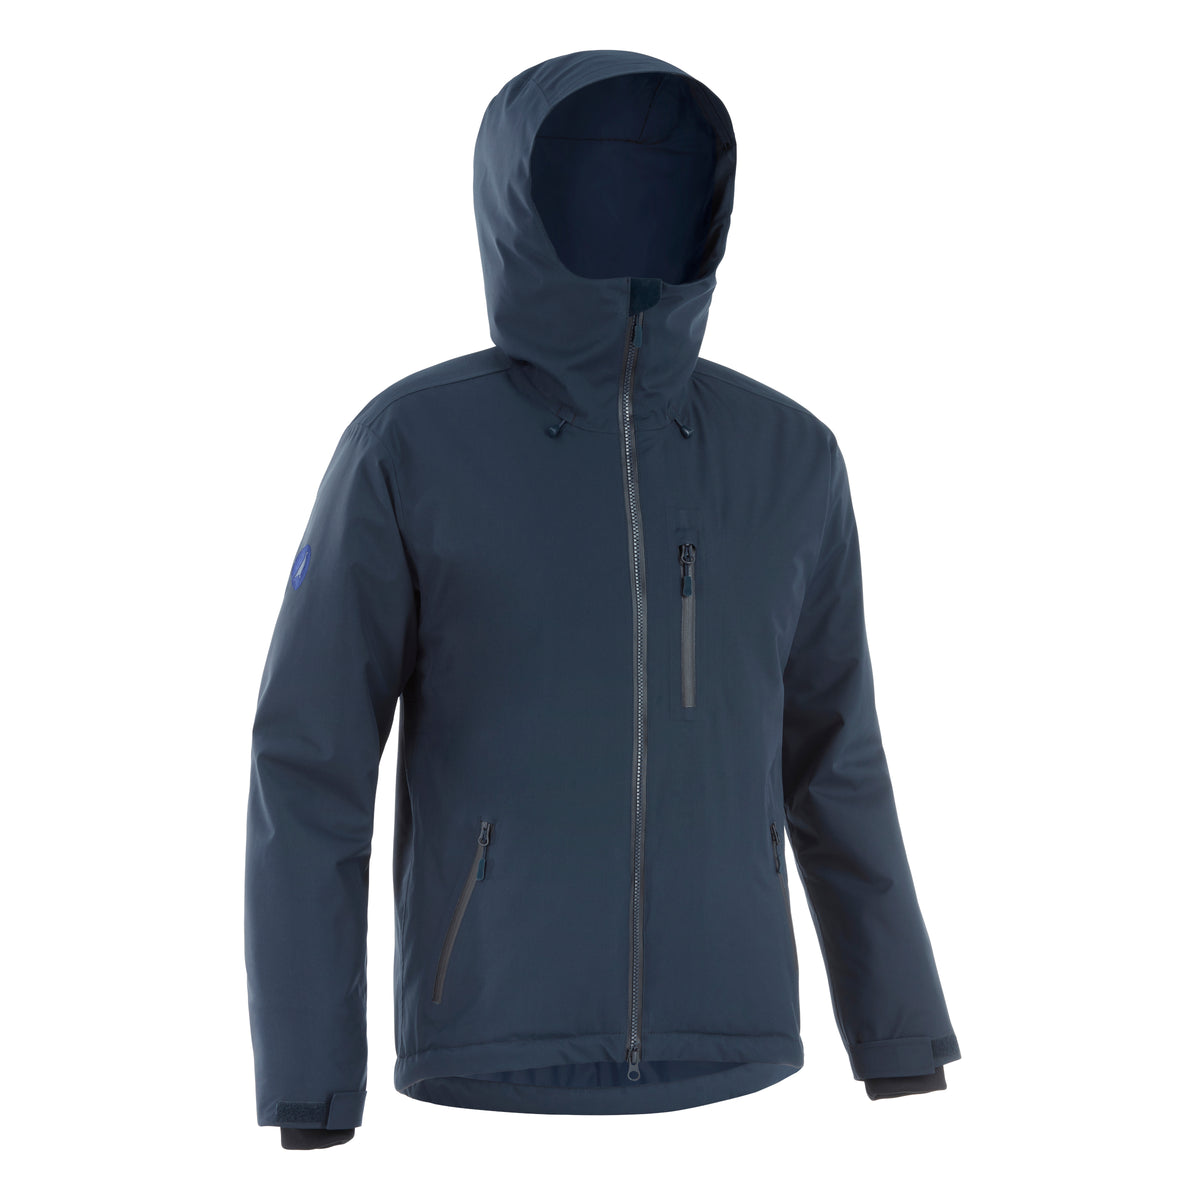 Lagoped Ursk - Ski jacket - Men's